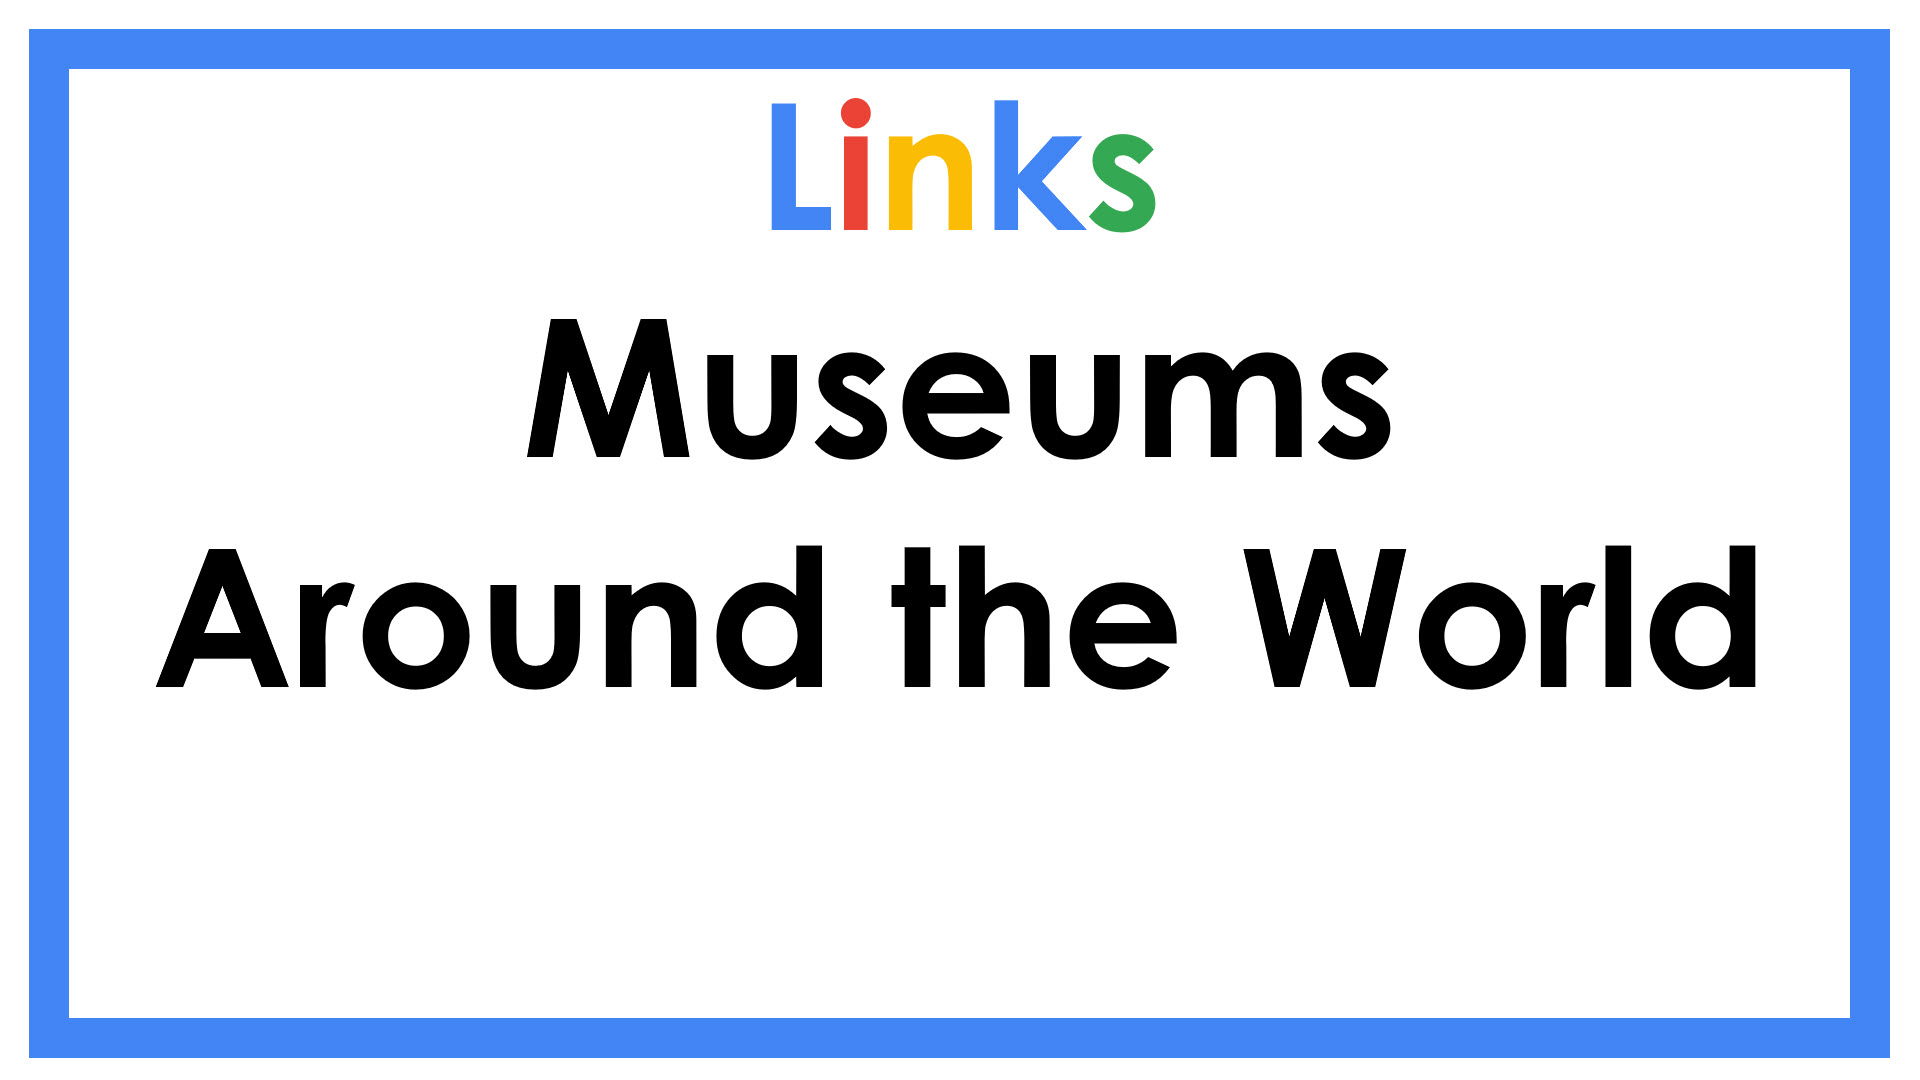 Links Museums Around the World